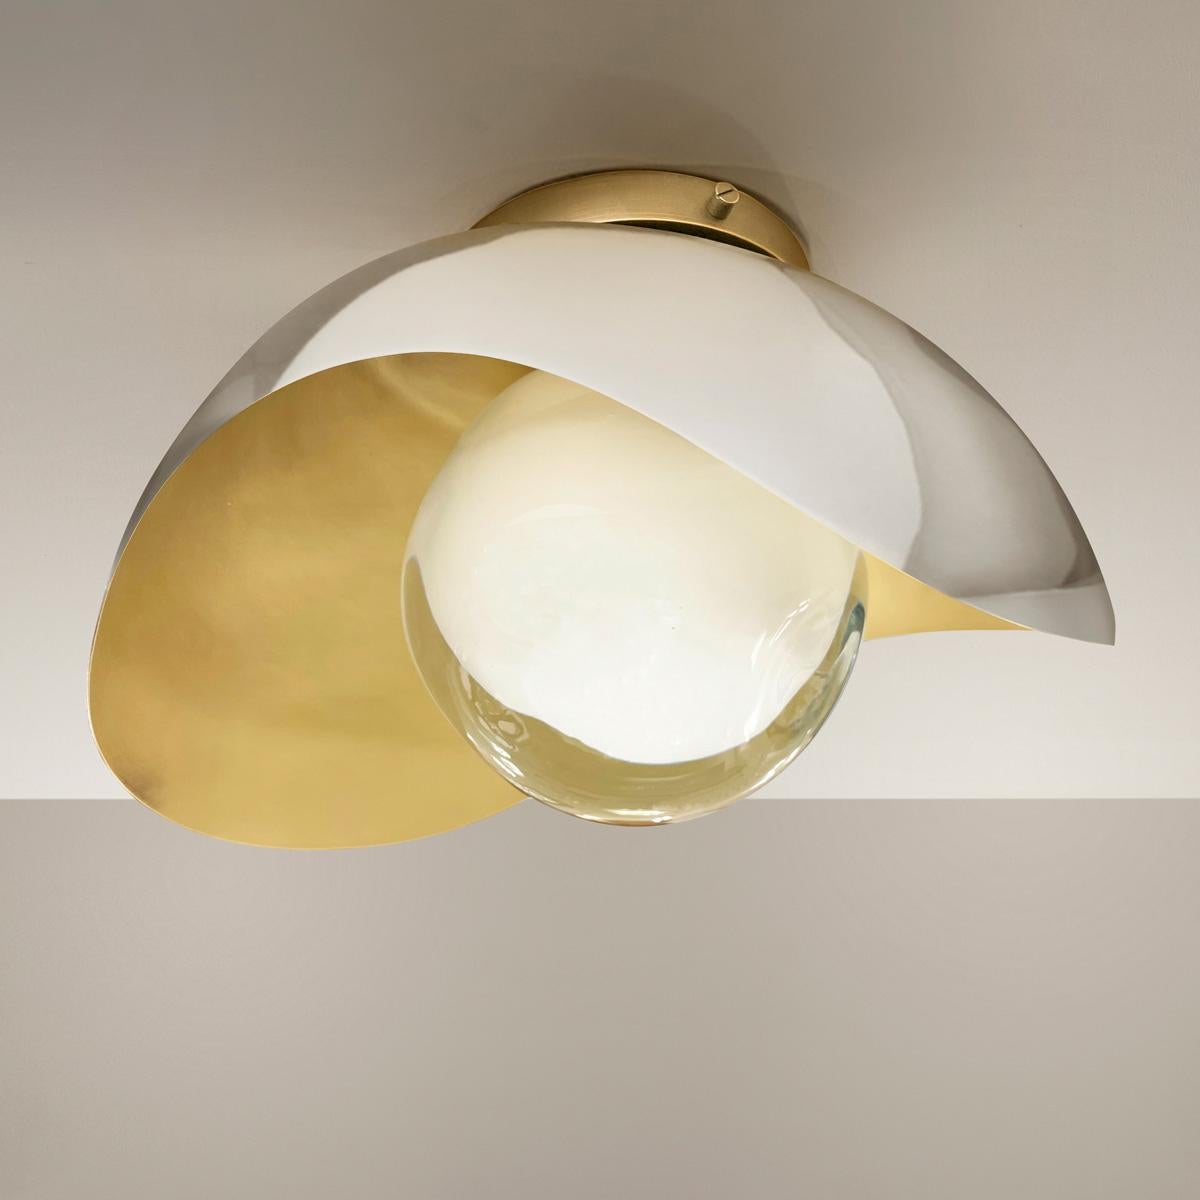 Perla Flushmount Ceiling Light by Gaspare Asaro-Satin Brass/Acqua Finish For Sale 5